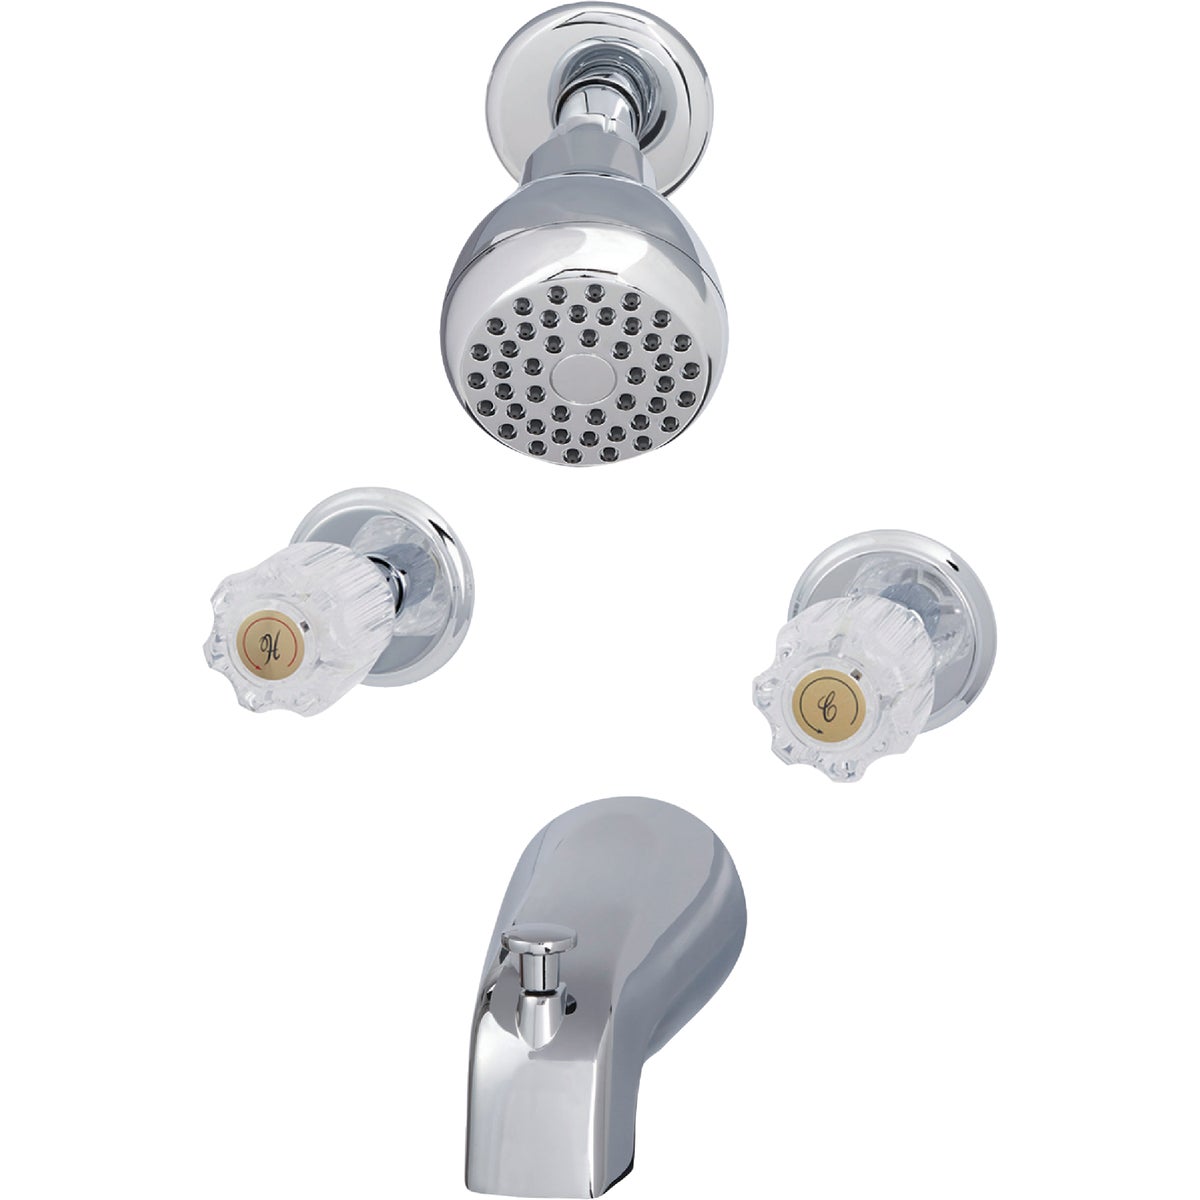 Item 404255, 2 knob acrylic handle tub and shower faucet, polished Chrome finish. 1.